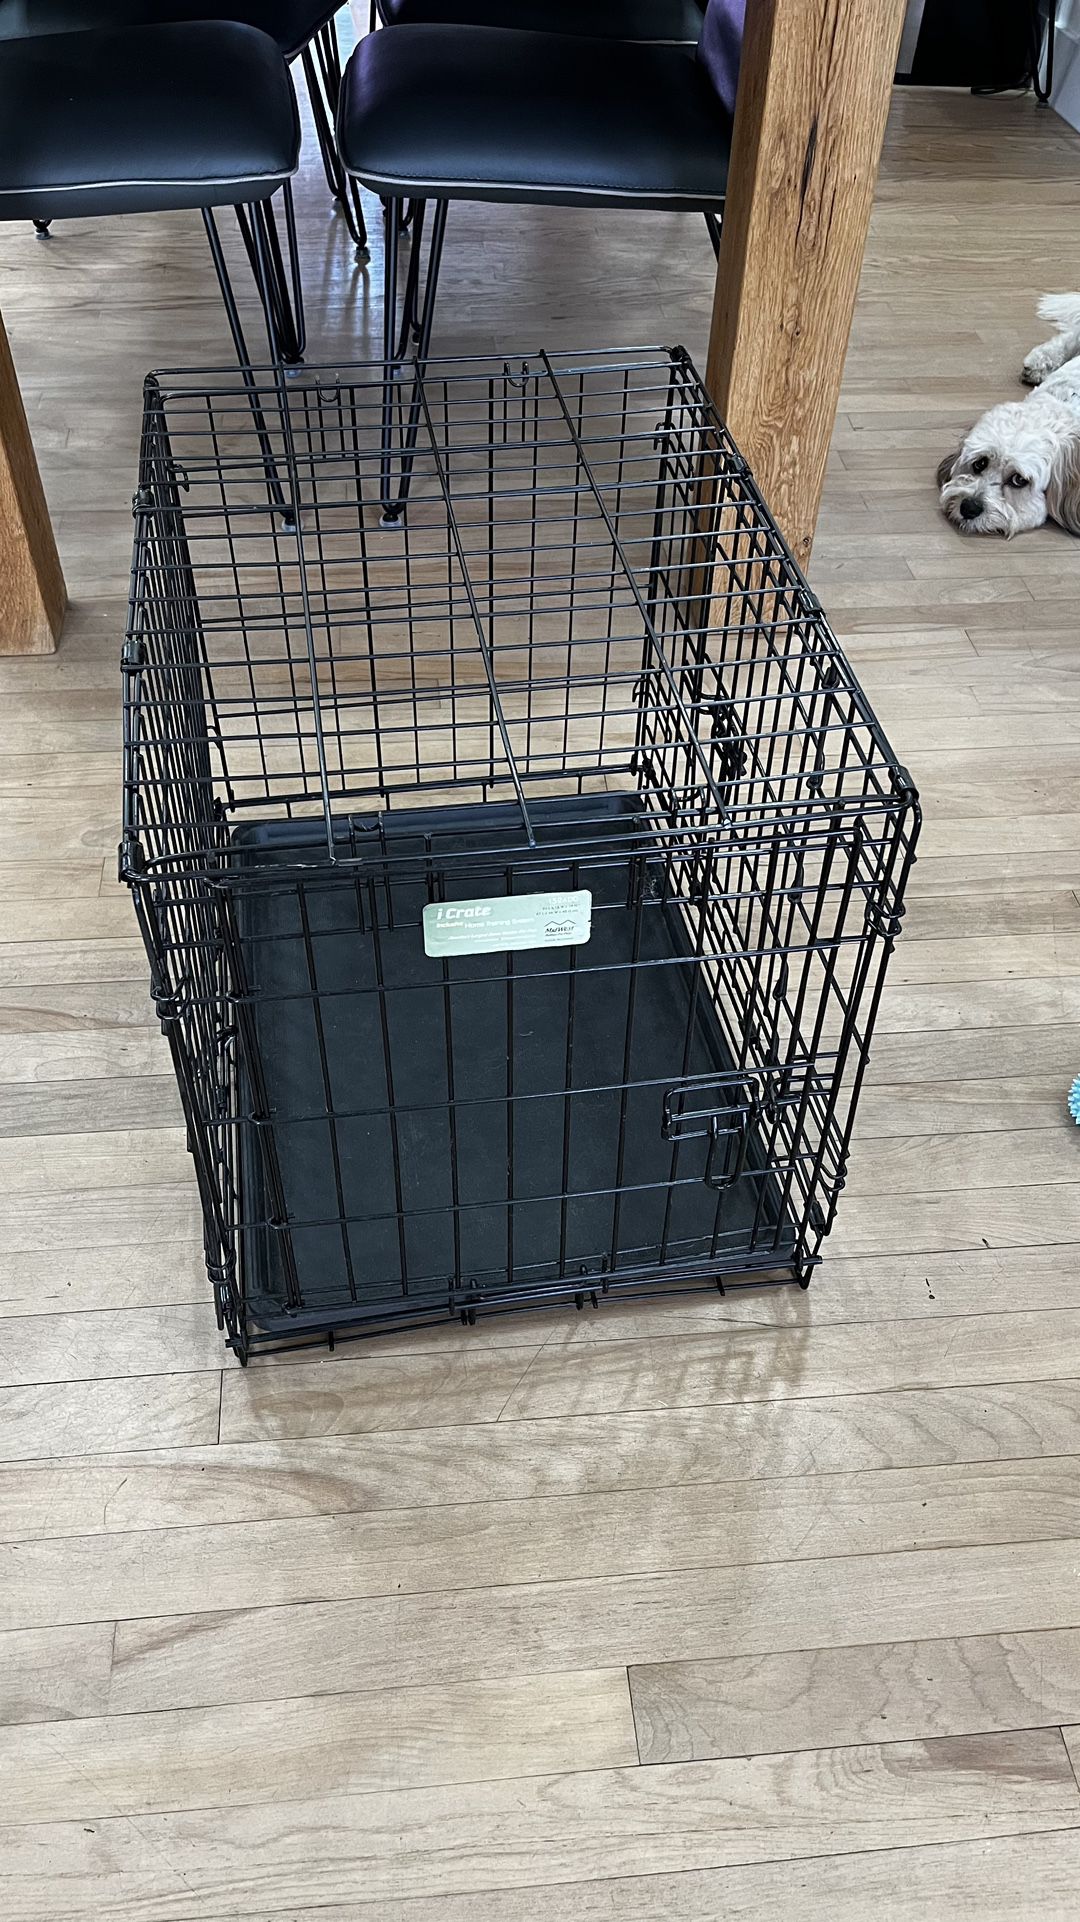 Dog Crate 24x18x19